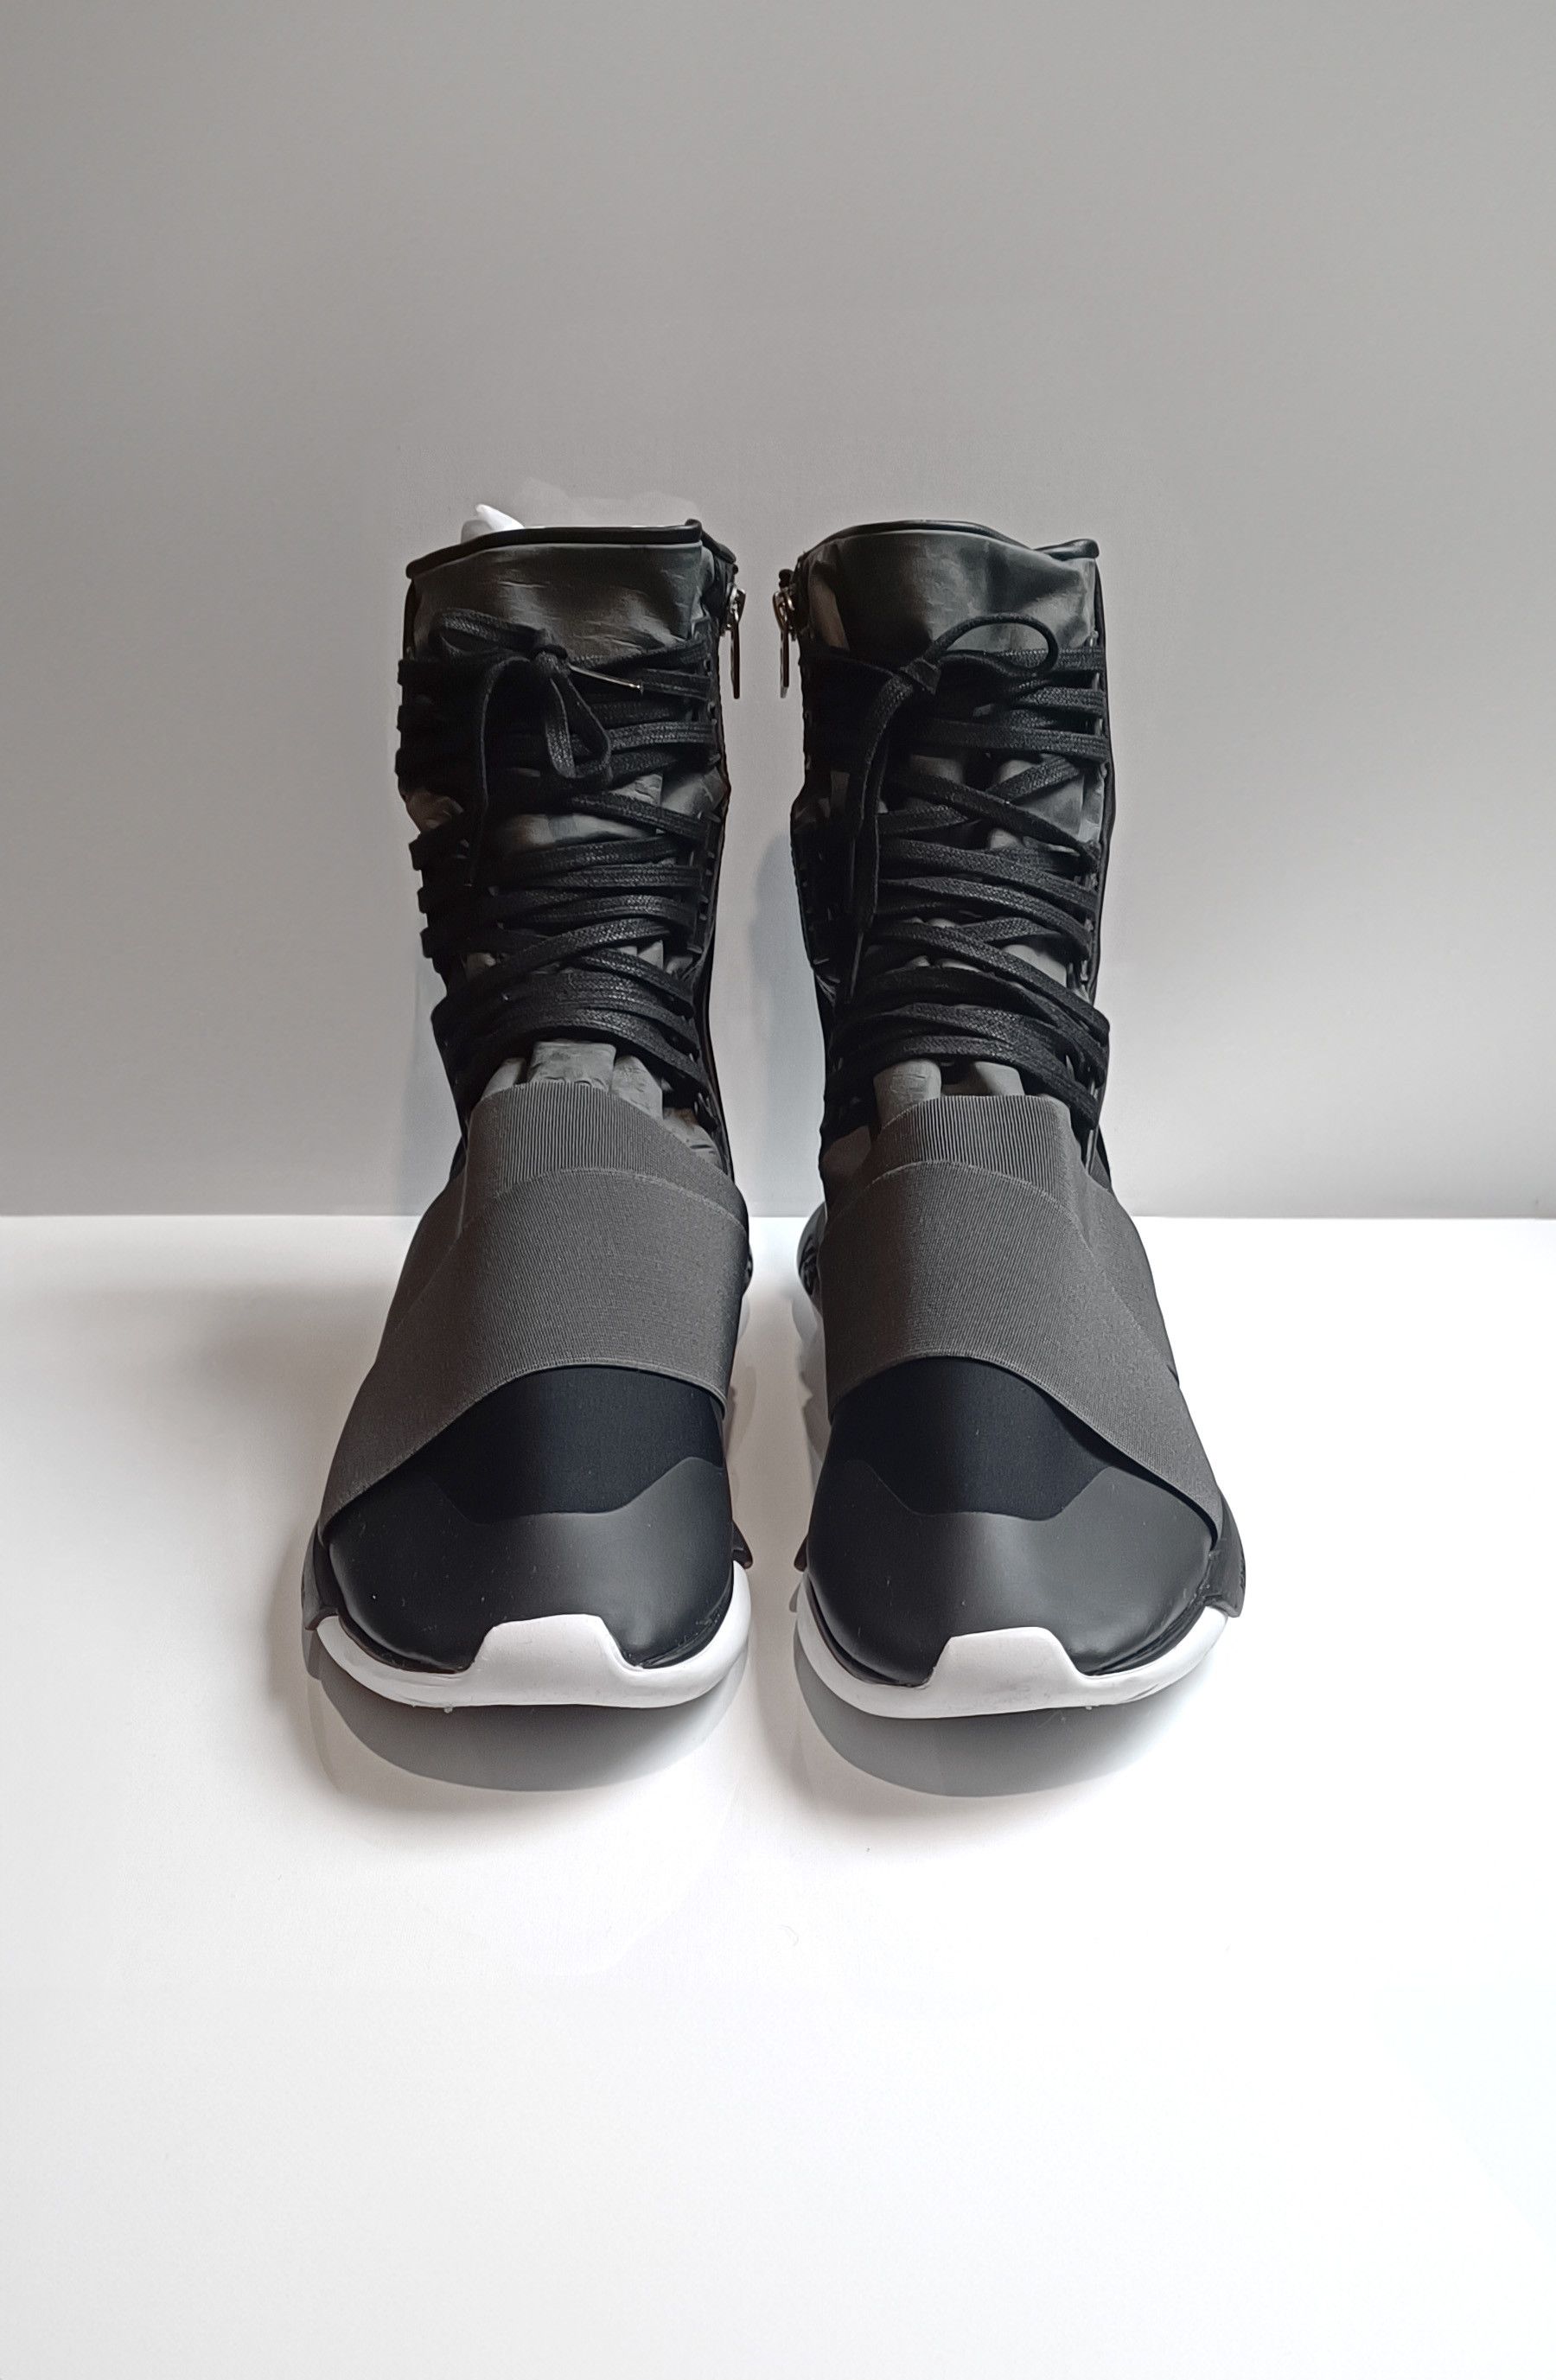 Adidas Y-3 Qasa Boot 'Charcoal Black' - 5